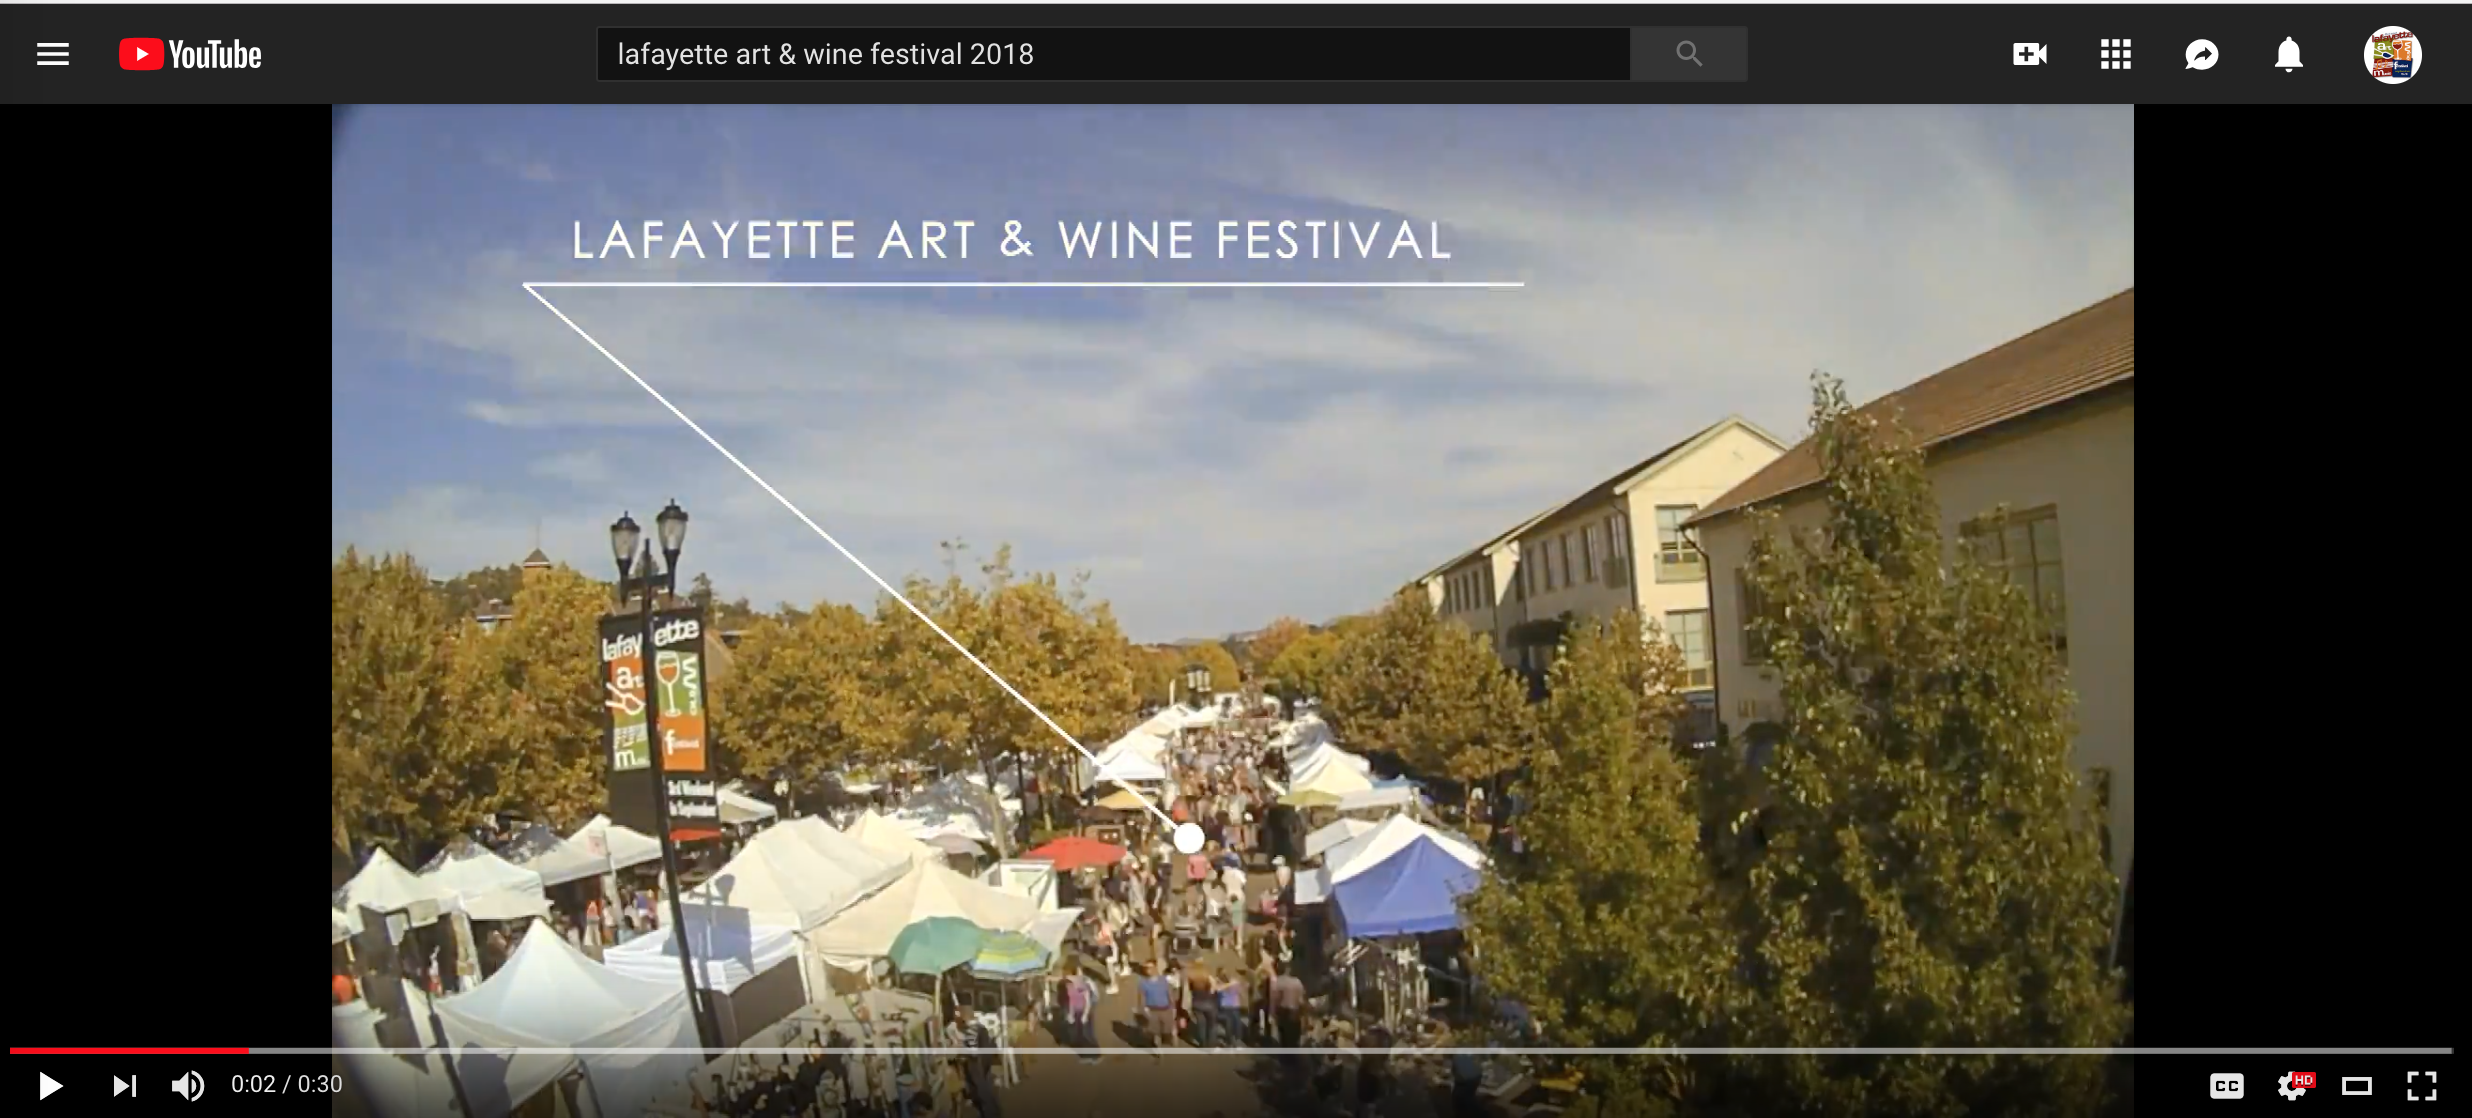 Watch the 2018 Lafayette Art & Wine Festival Official Video - https://youtu.be/sFIlBXqB_b0